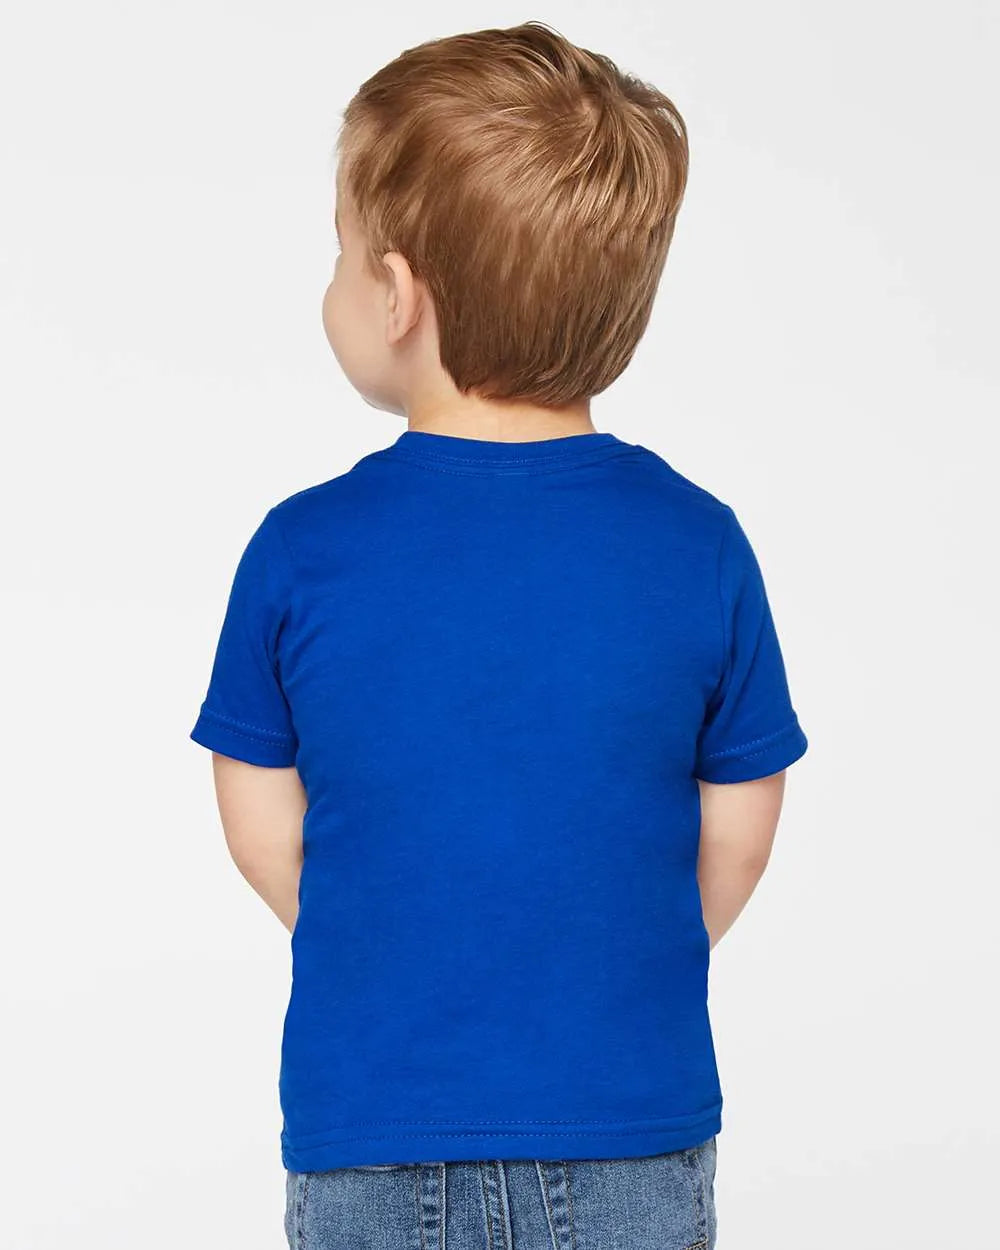 Toddler Fine Jersey Tee - 3321 - Print Me Shirts